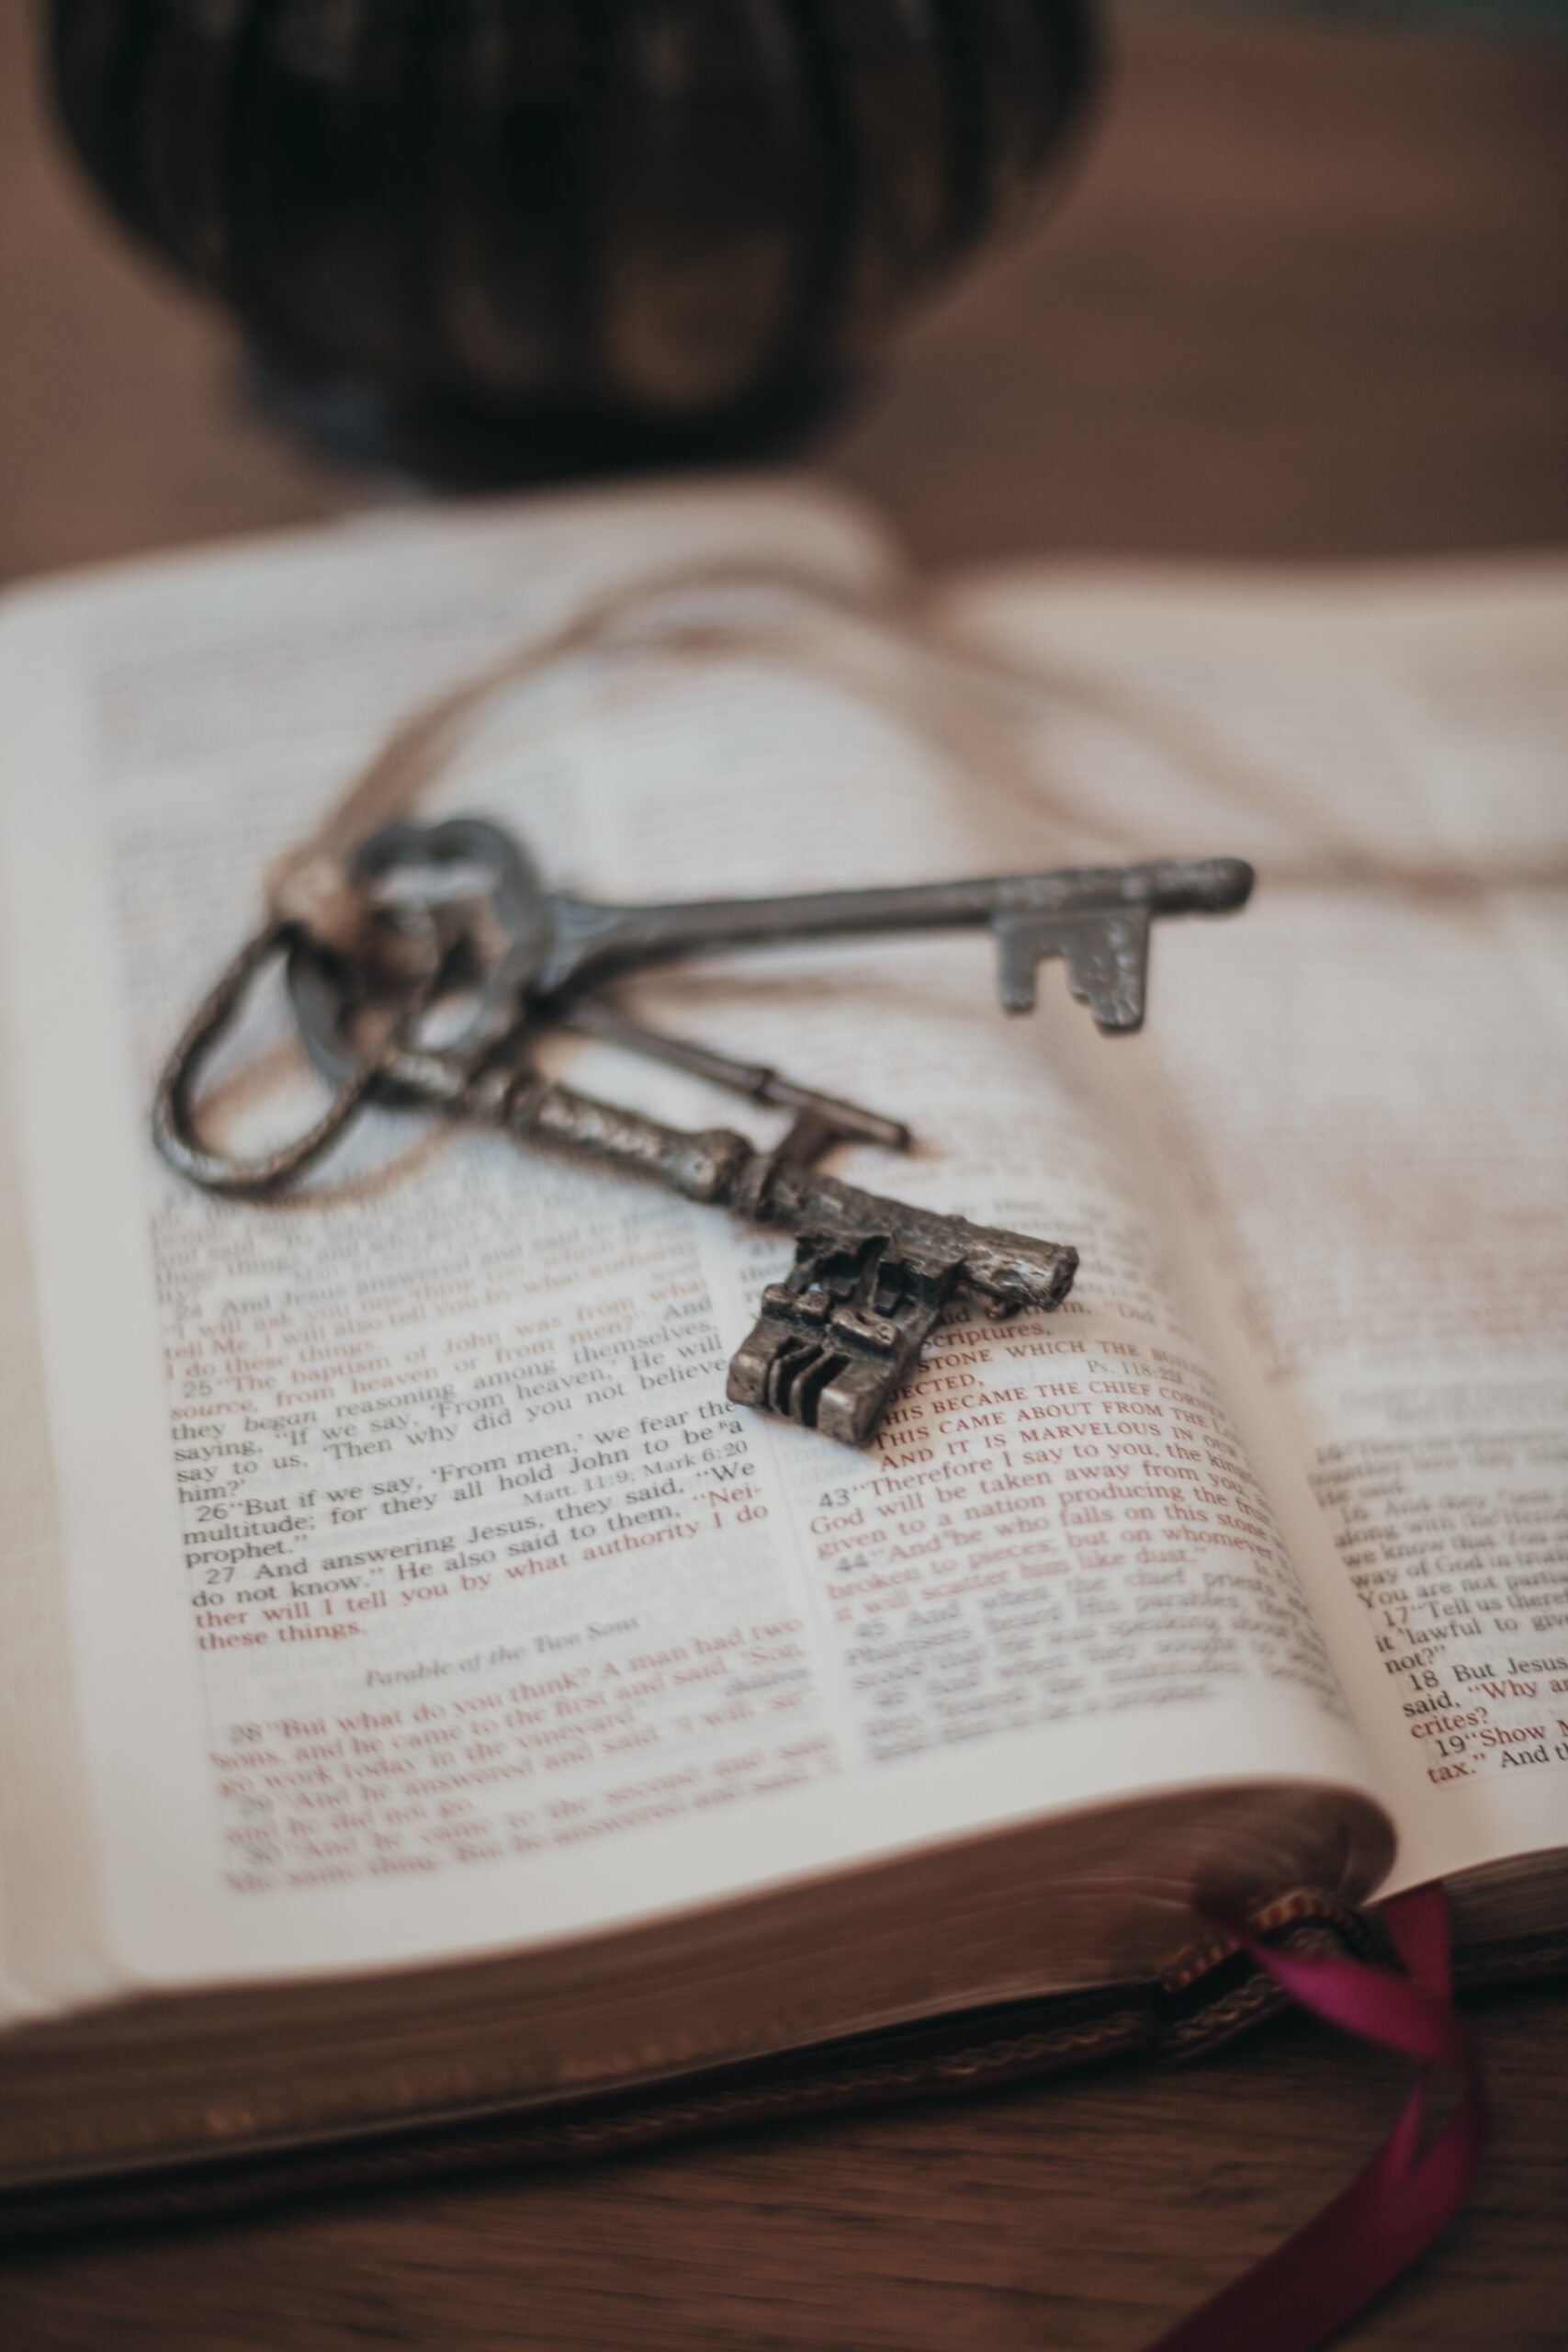 Skeleton keys lying on an open book